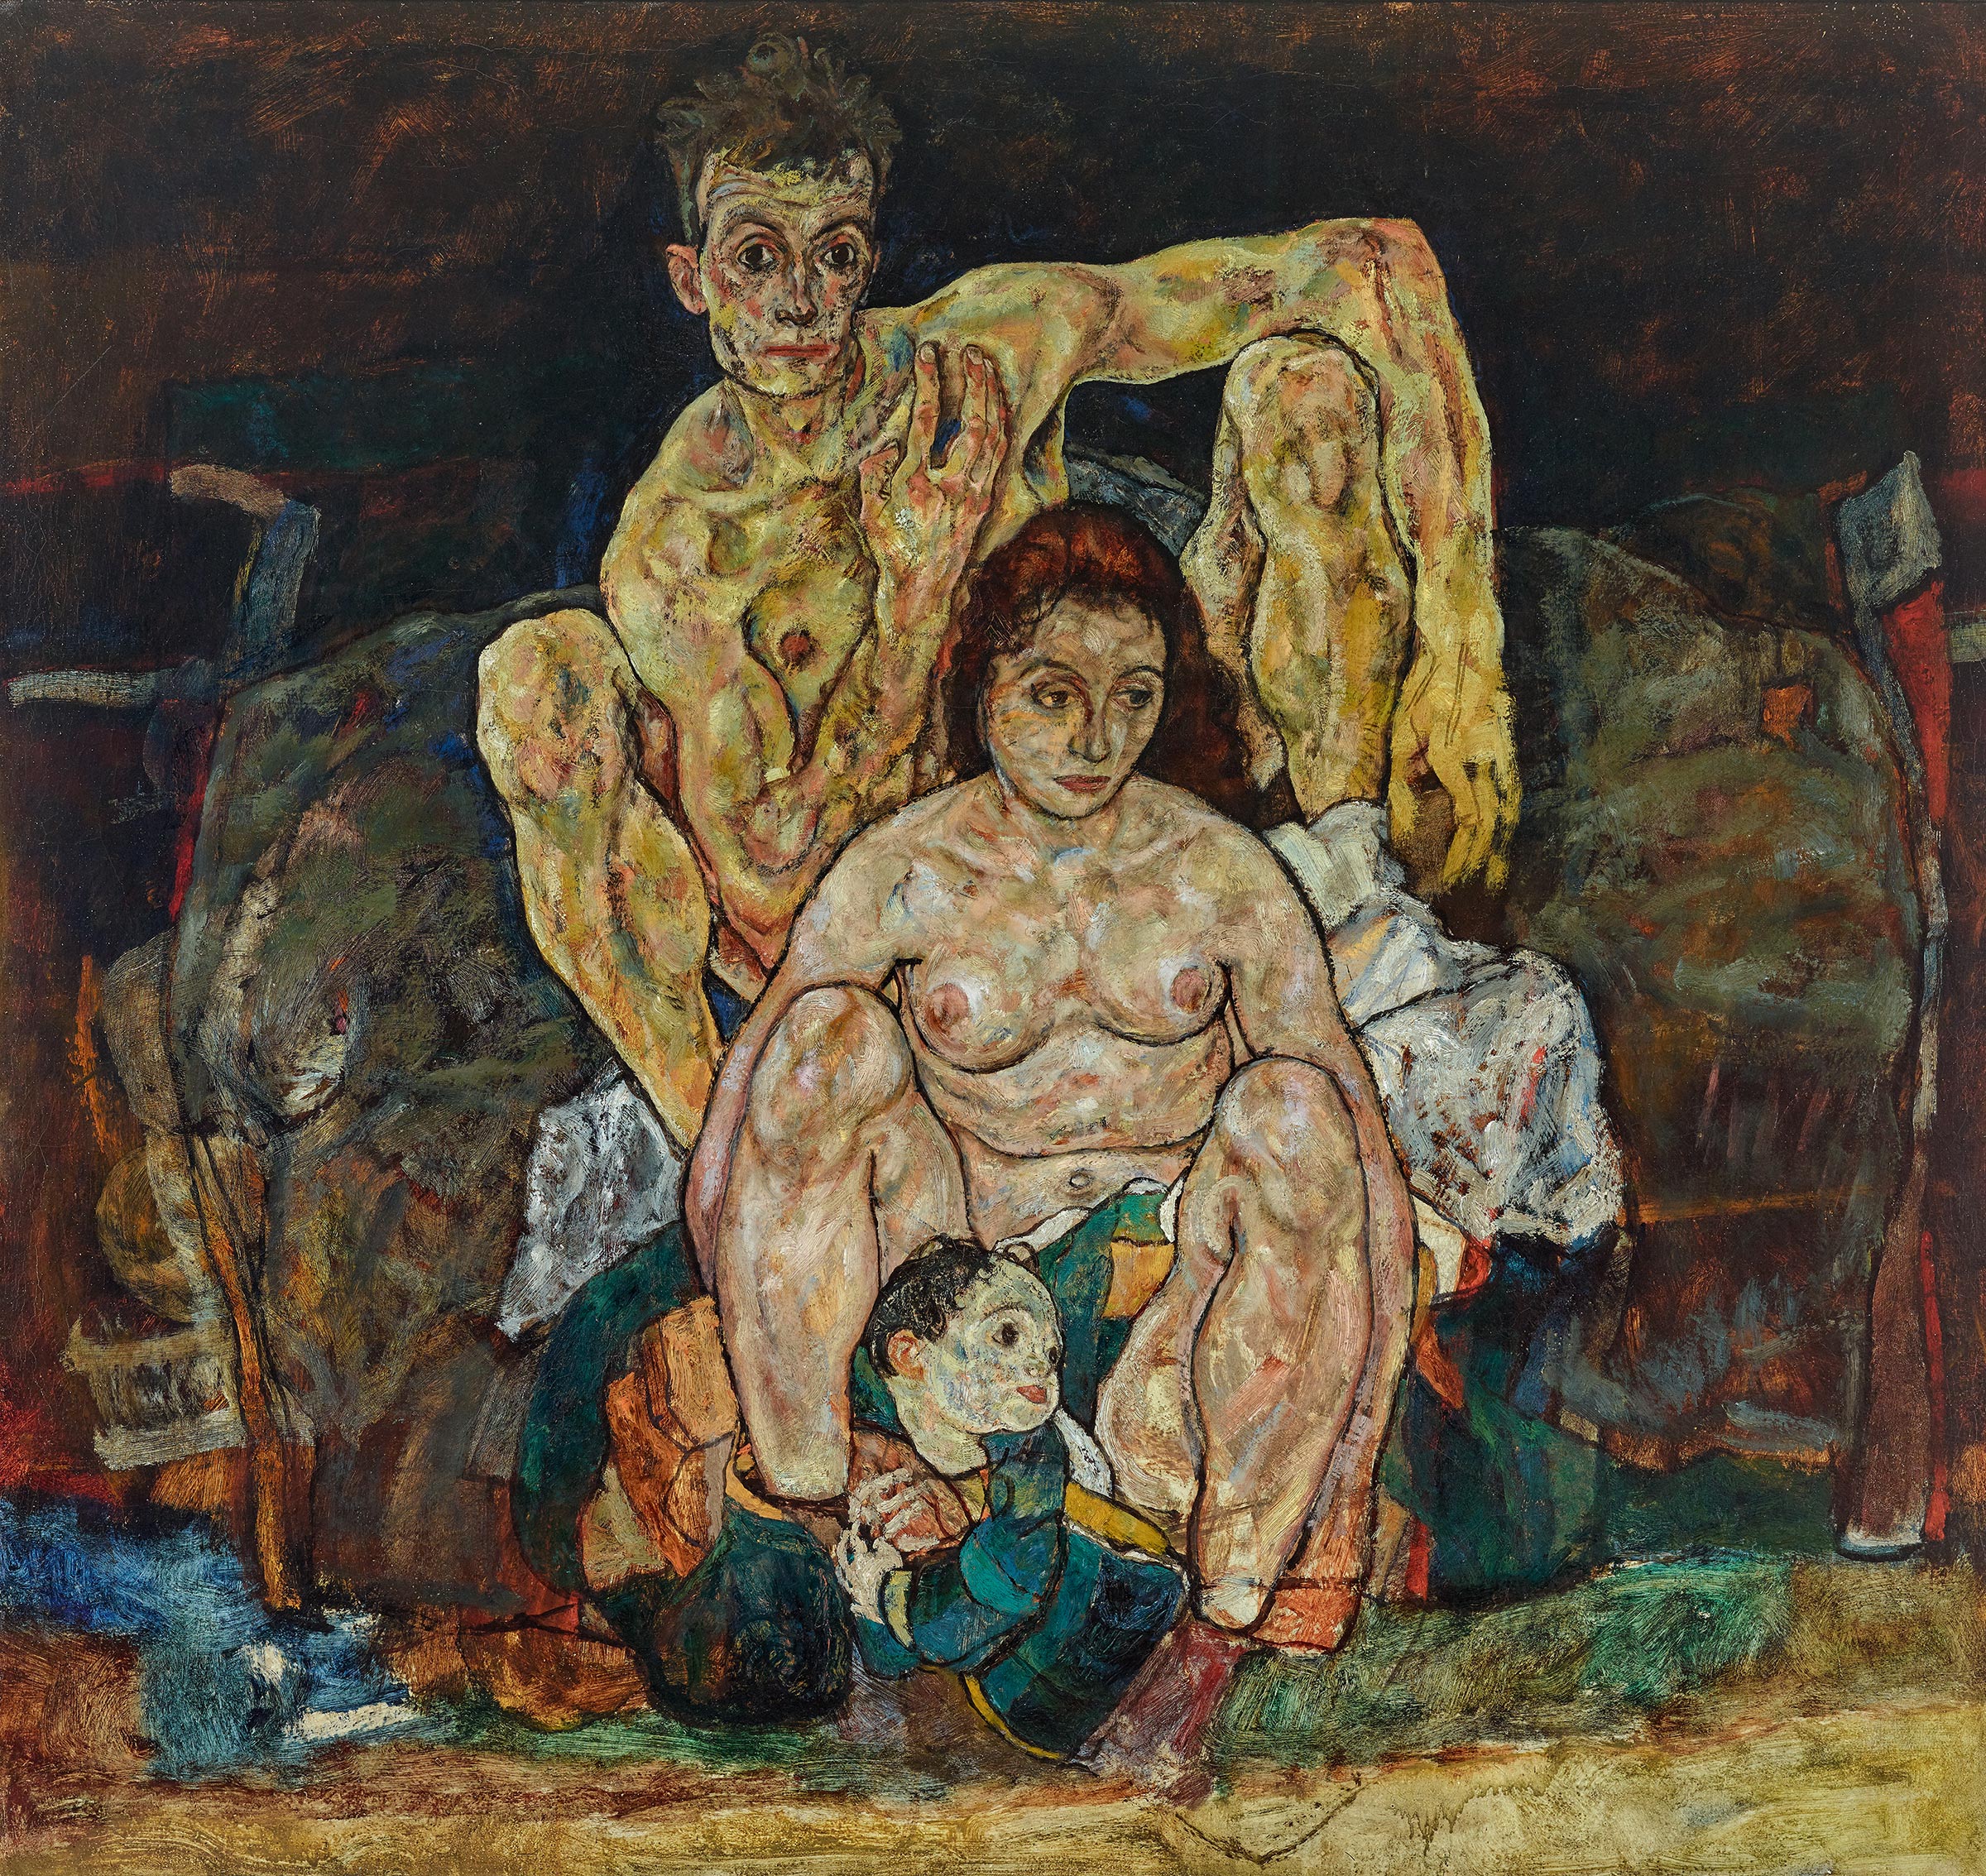 Egon Schiele's "The Family," 1918